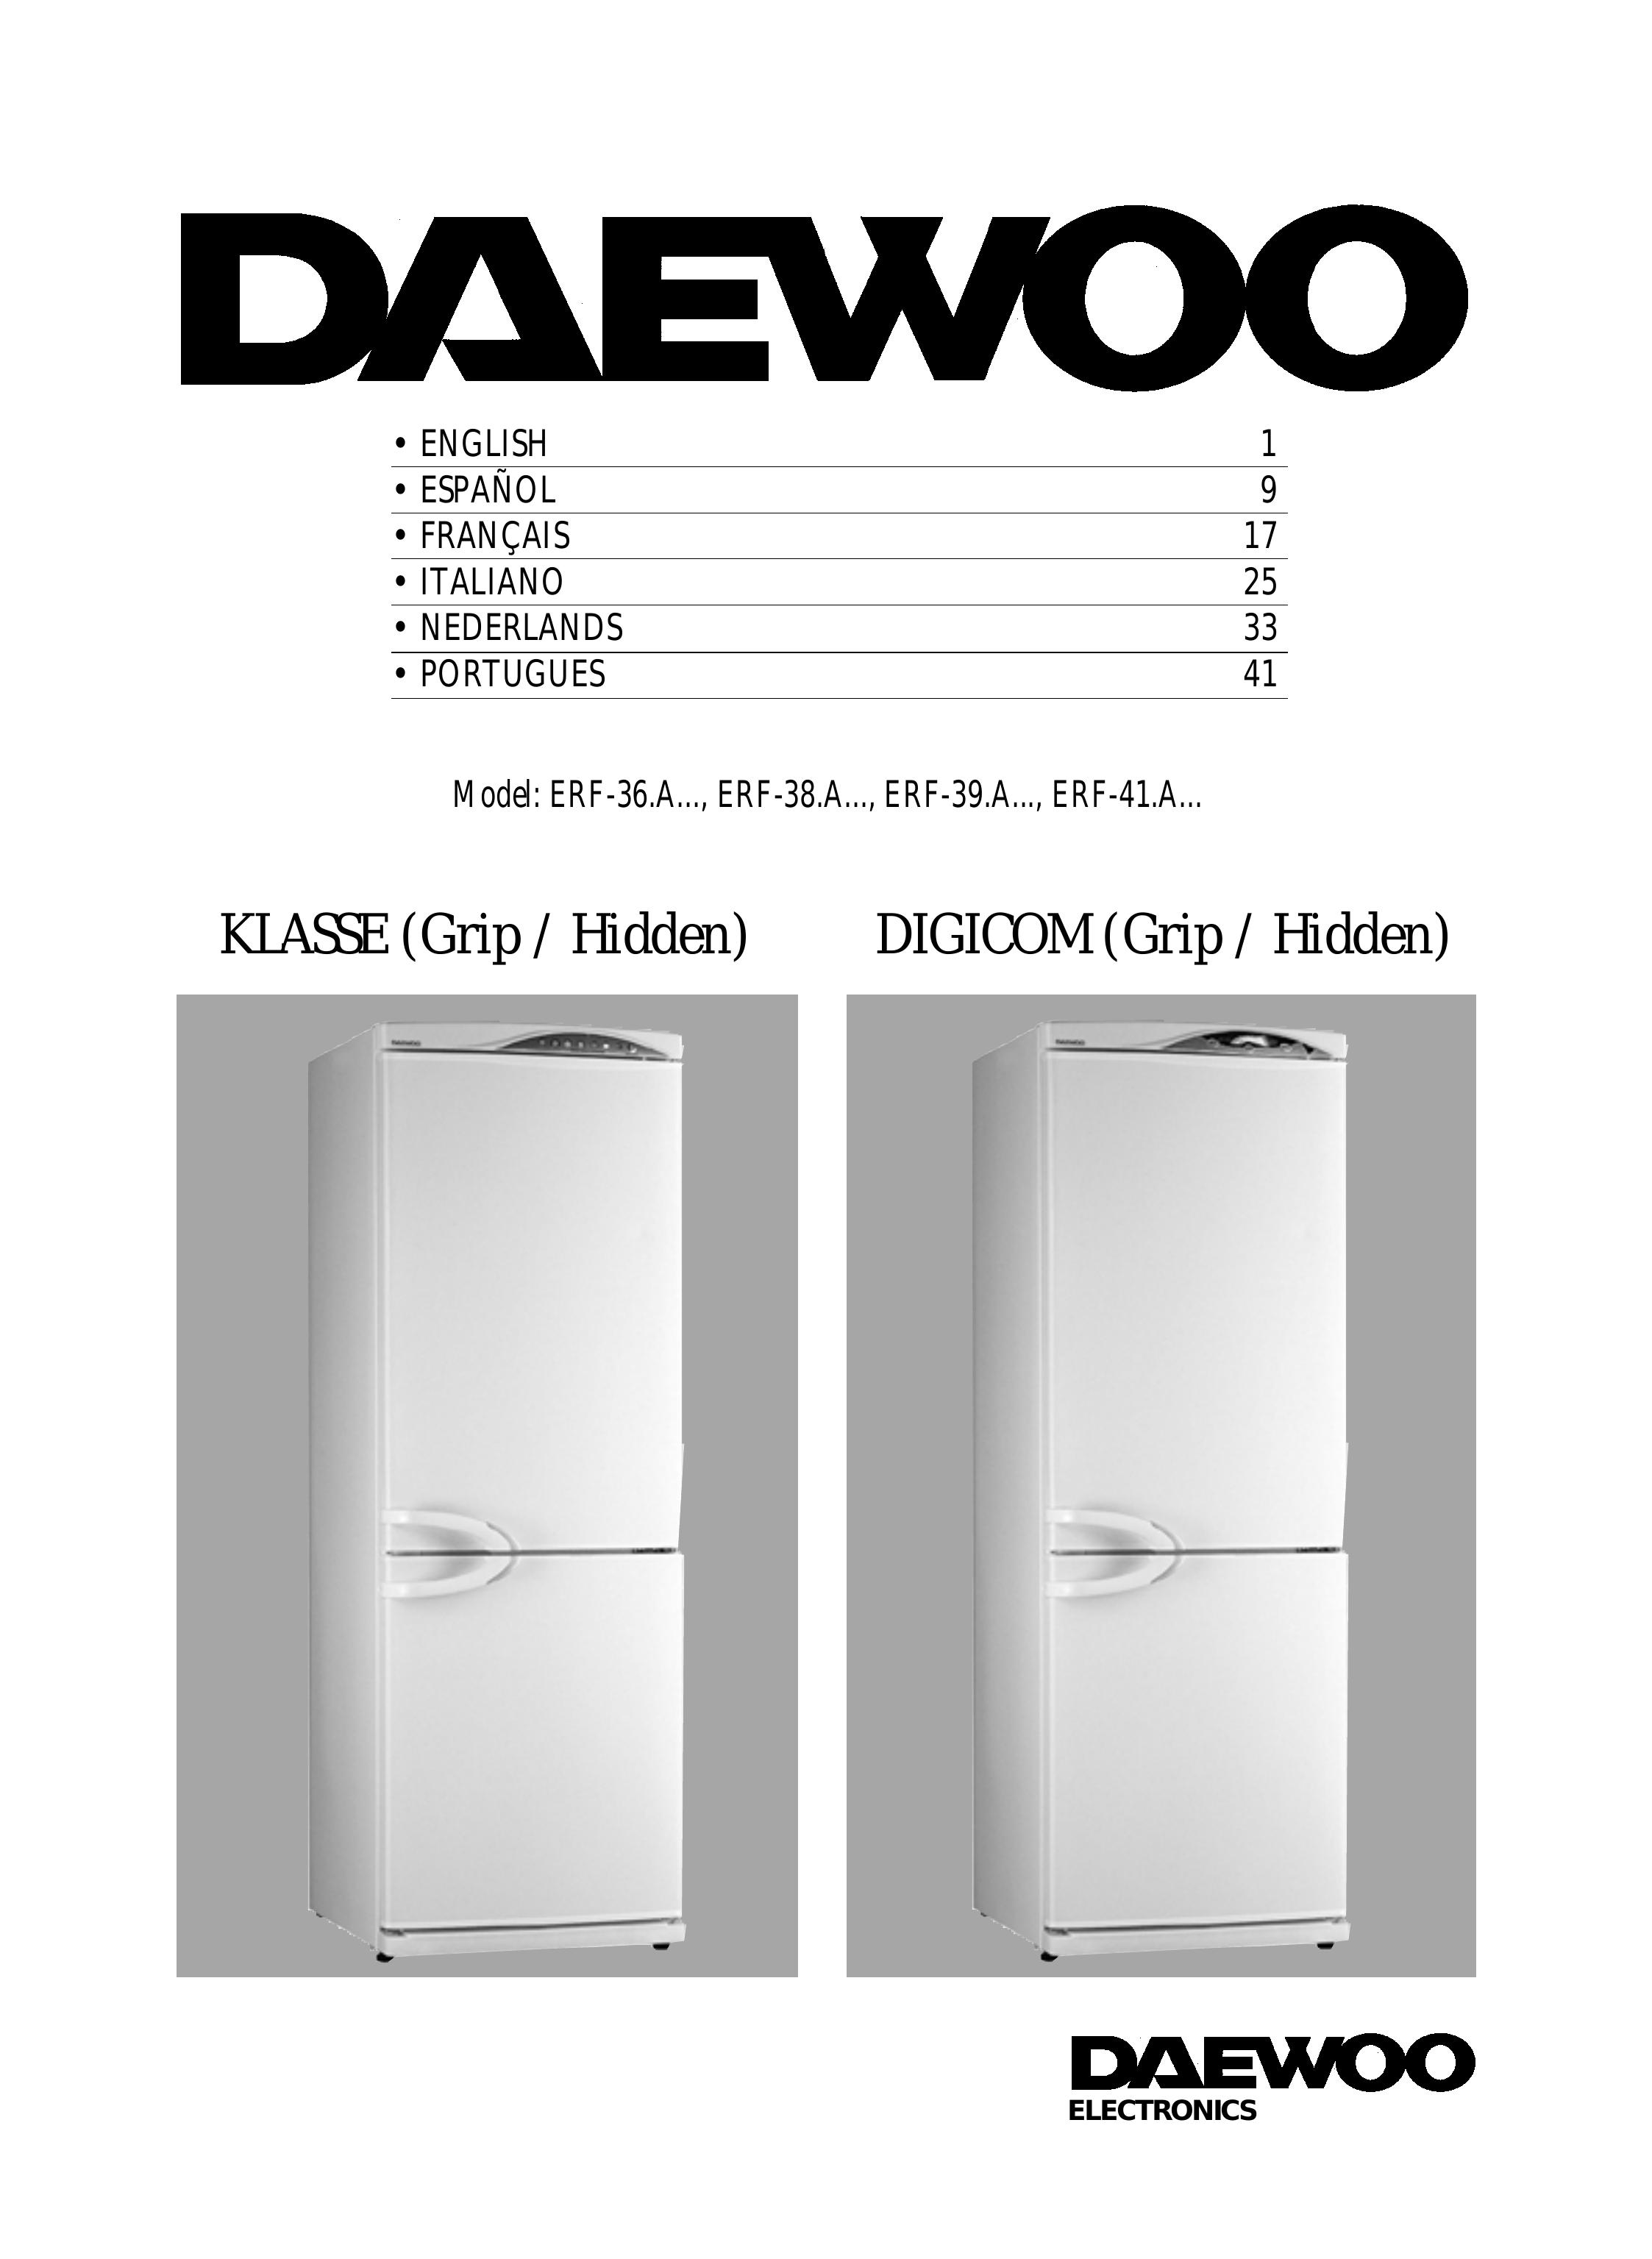 Daewoo RF-39.A Refrigerator User Manual